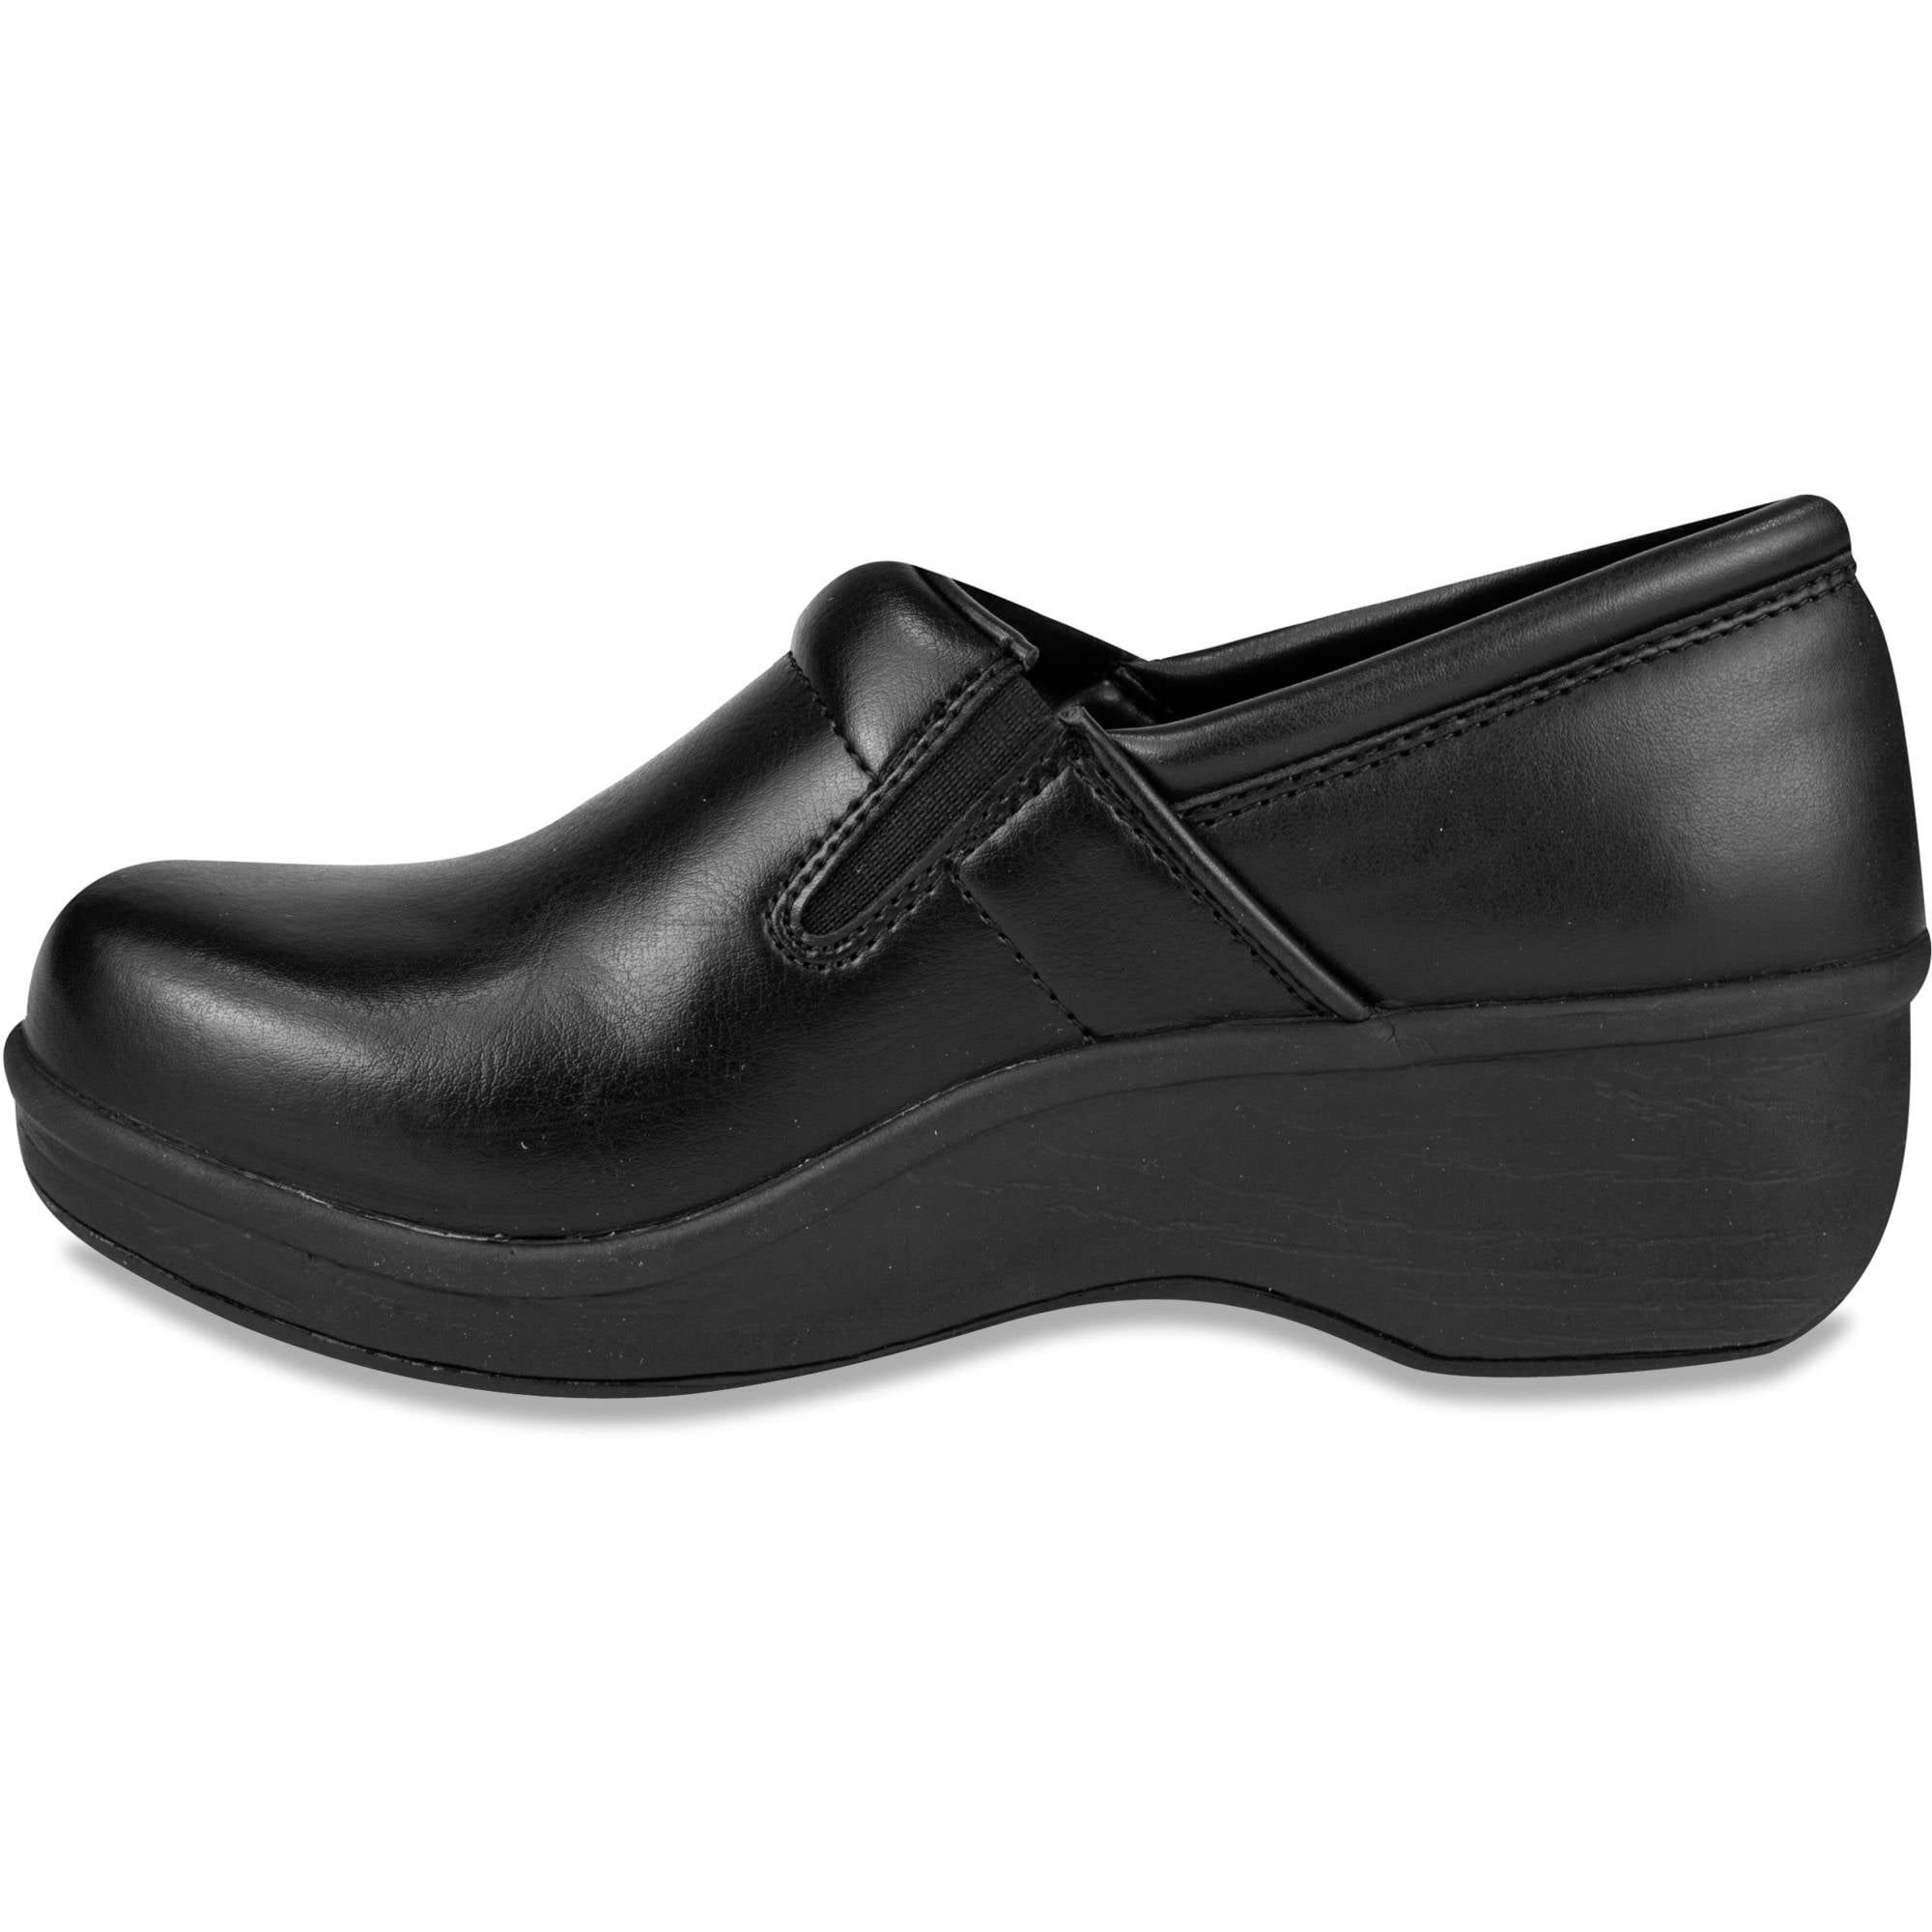 walmart slip resistant women's shoes